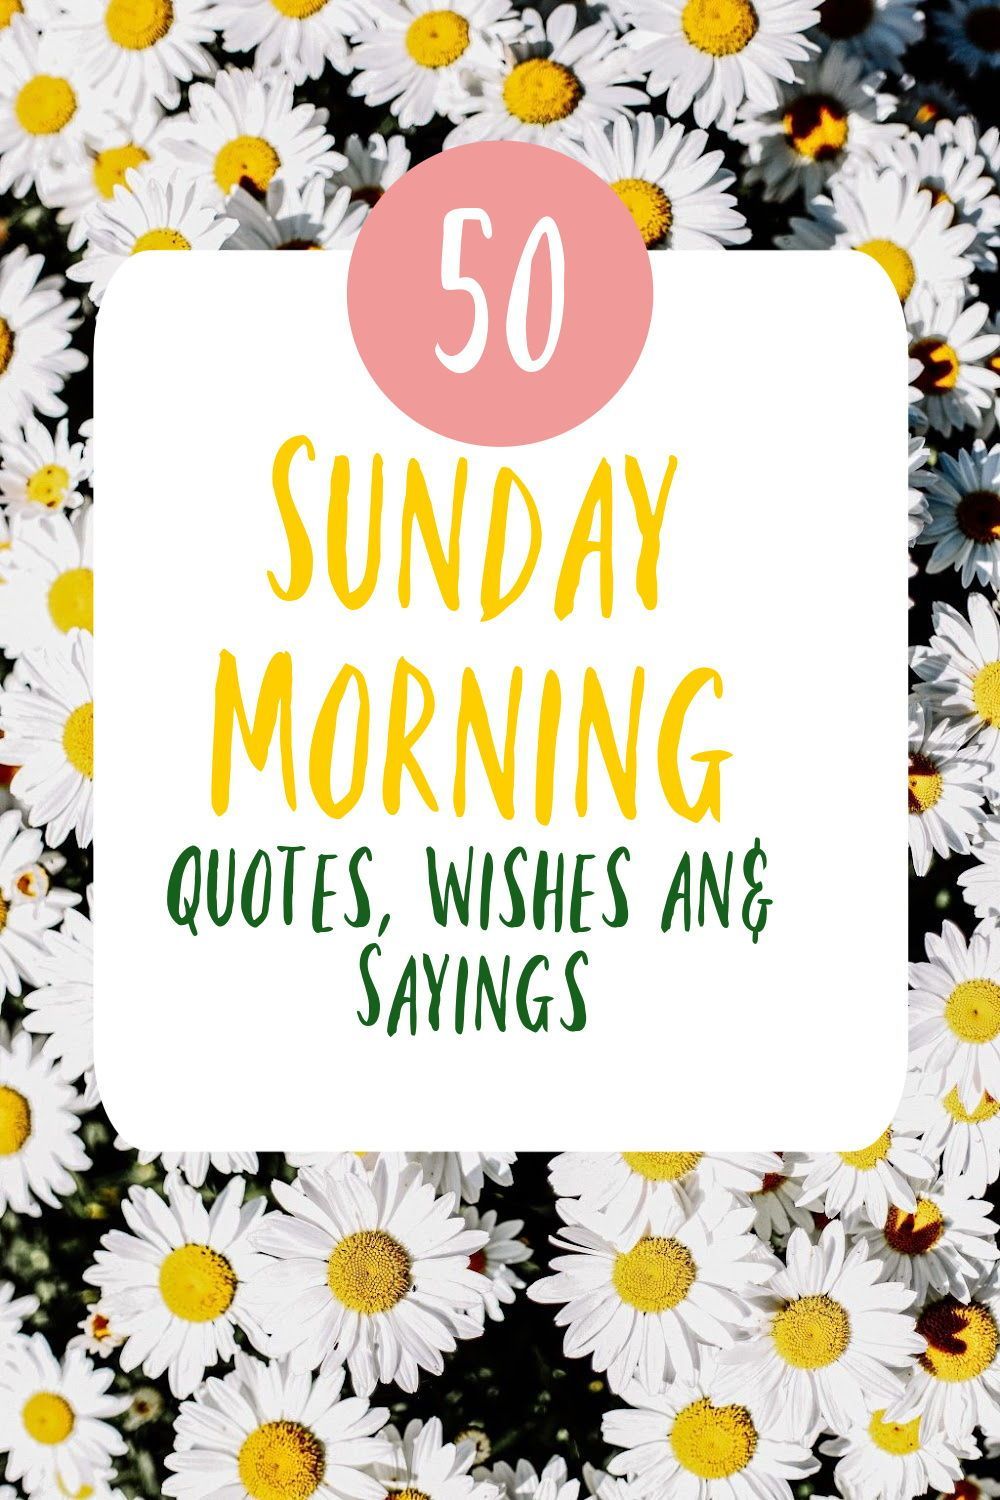 Sunday Morning Quotes Wishes & Sayings